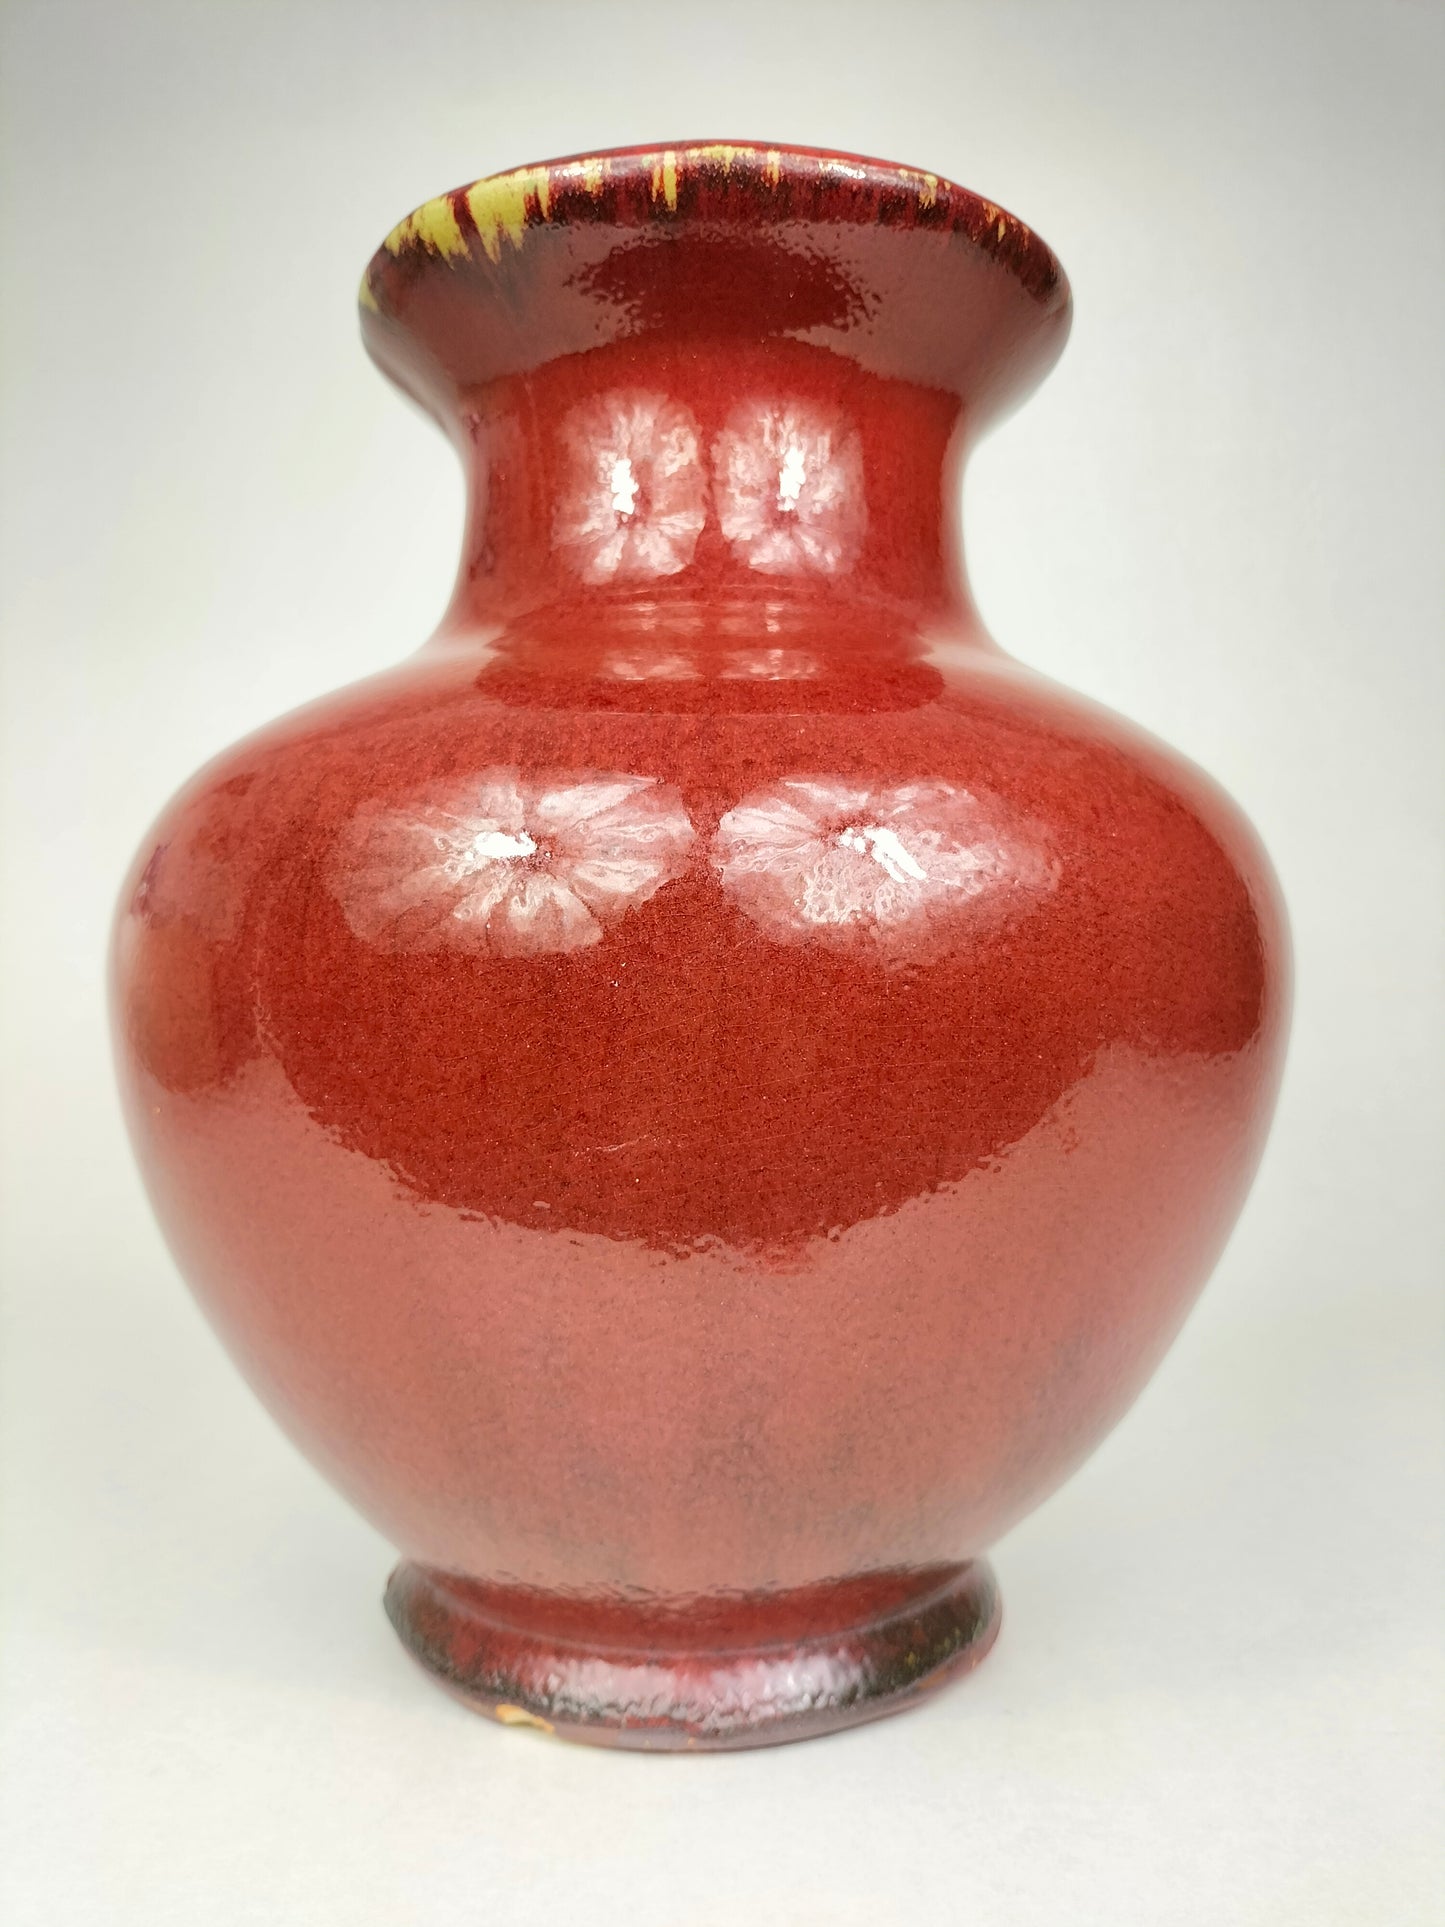 Grande vaso chinês de sangue de boi // Sang de boeuf - século XX